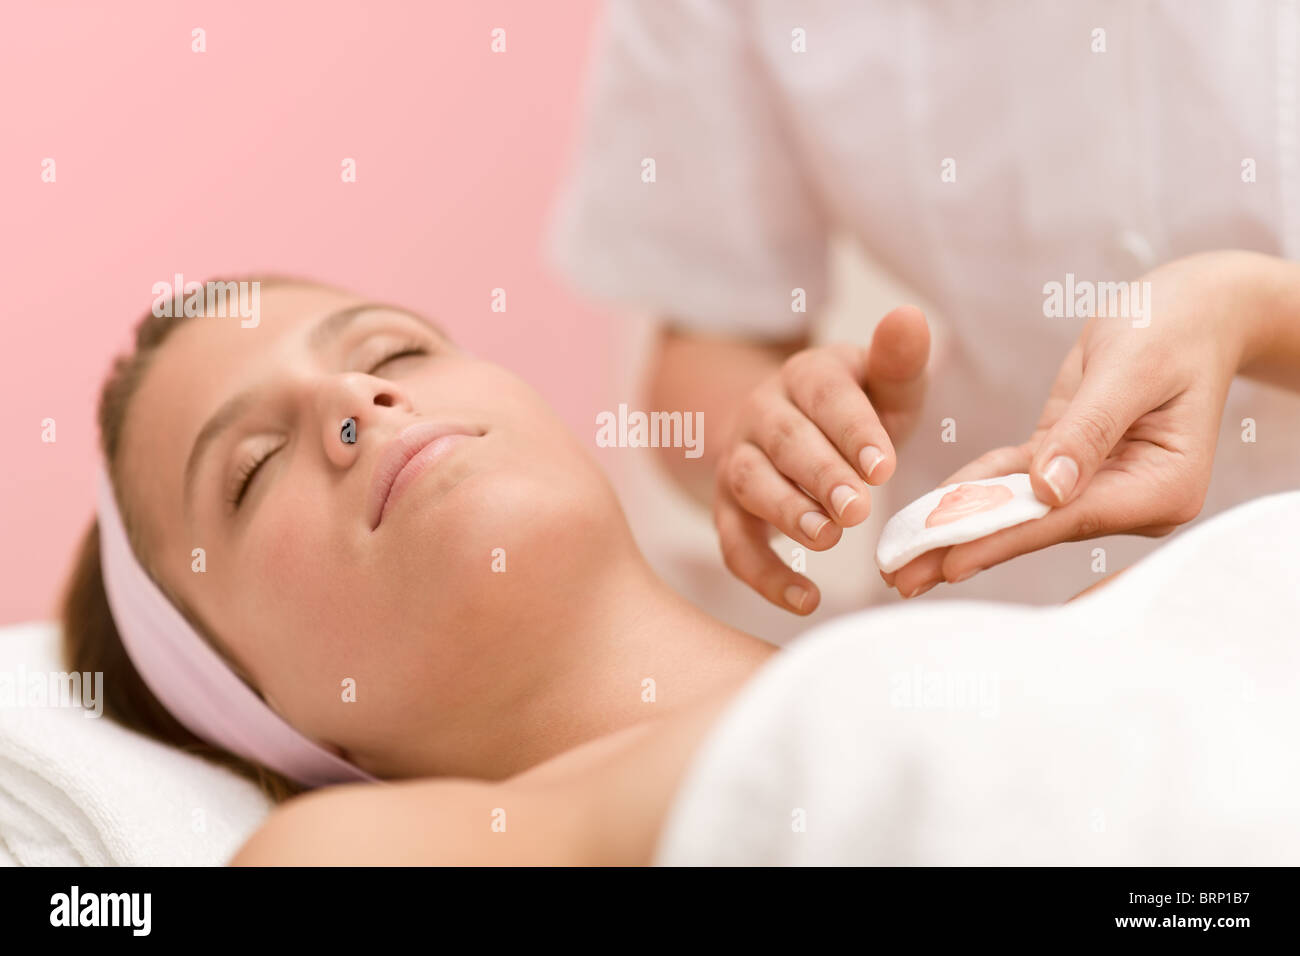 Facial care - woman cosmetics treatment Stock Photo